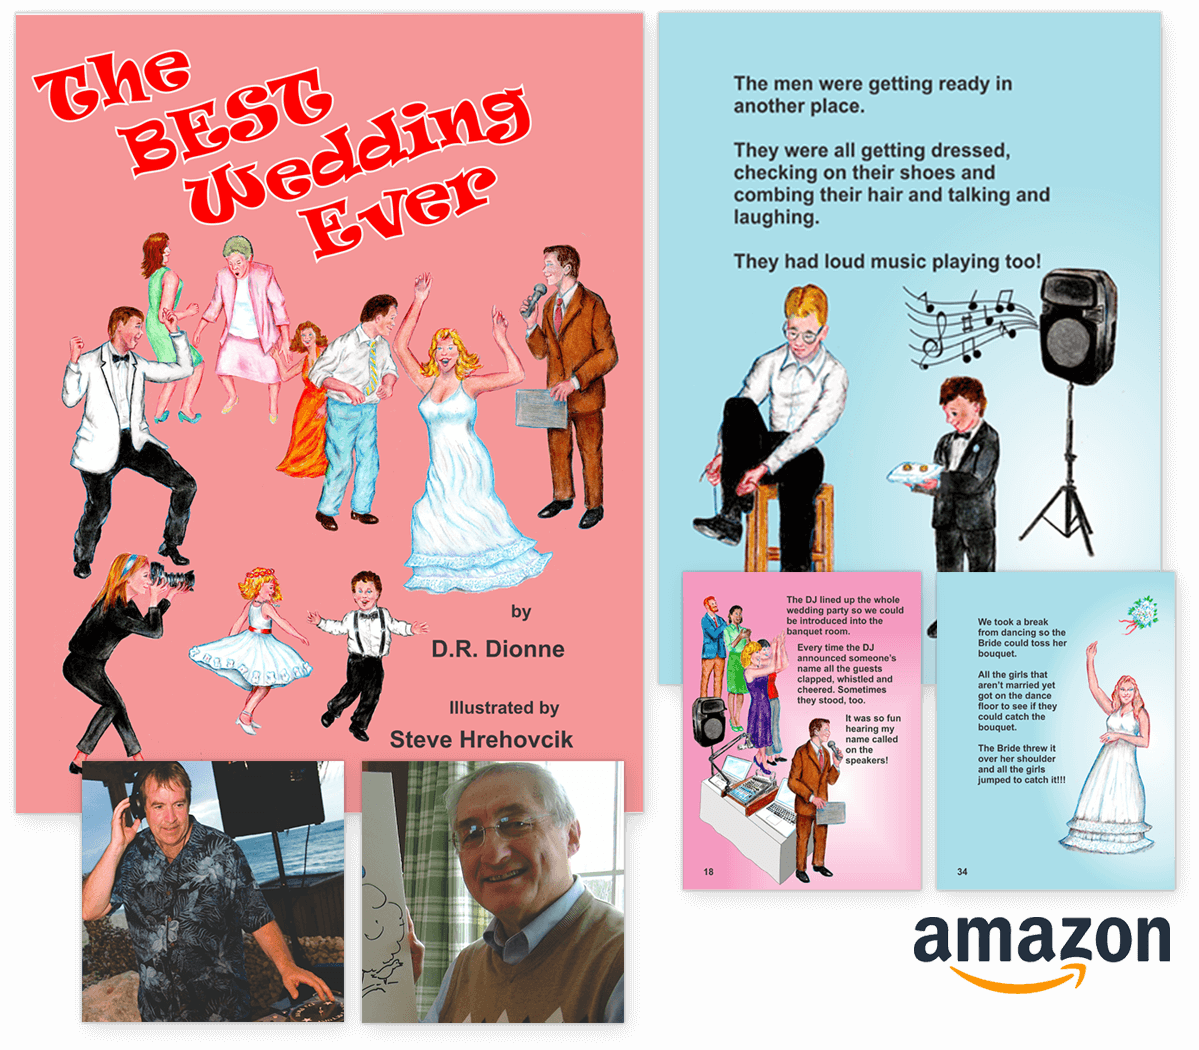 The Best Wedding Ever D.R. Dionne and Steve Hrehovcik (Illustrator)